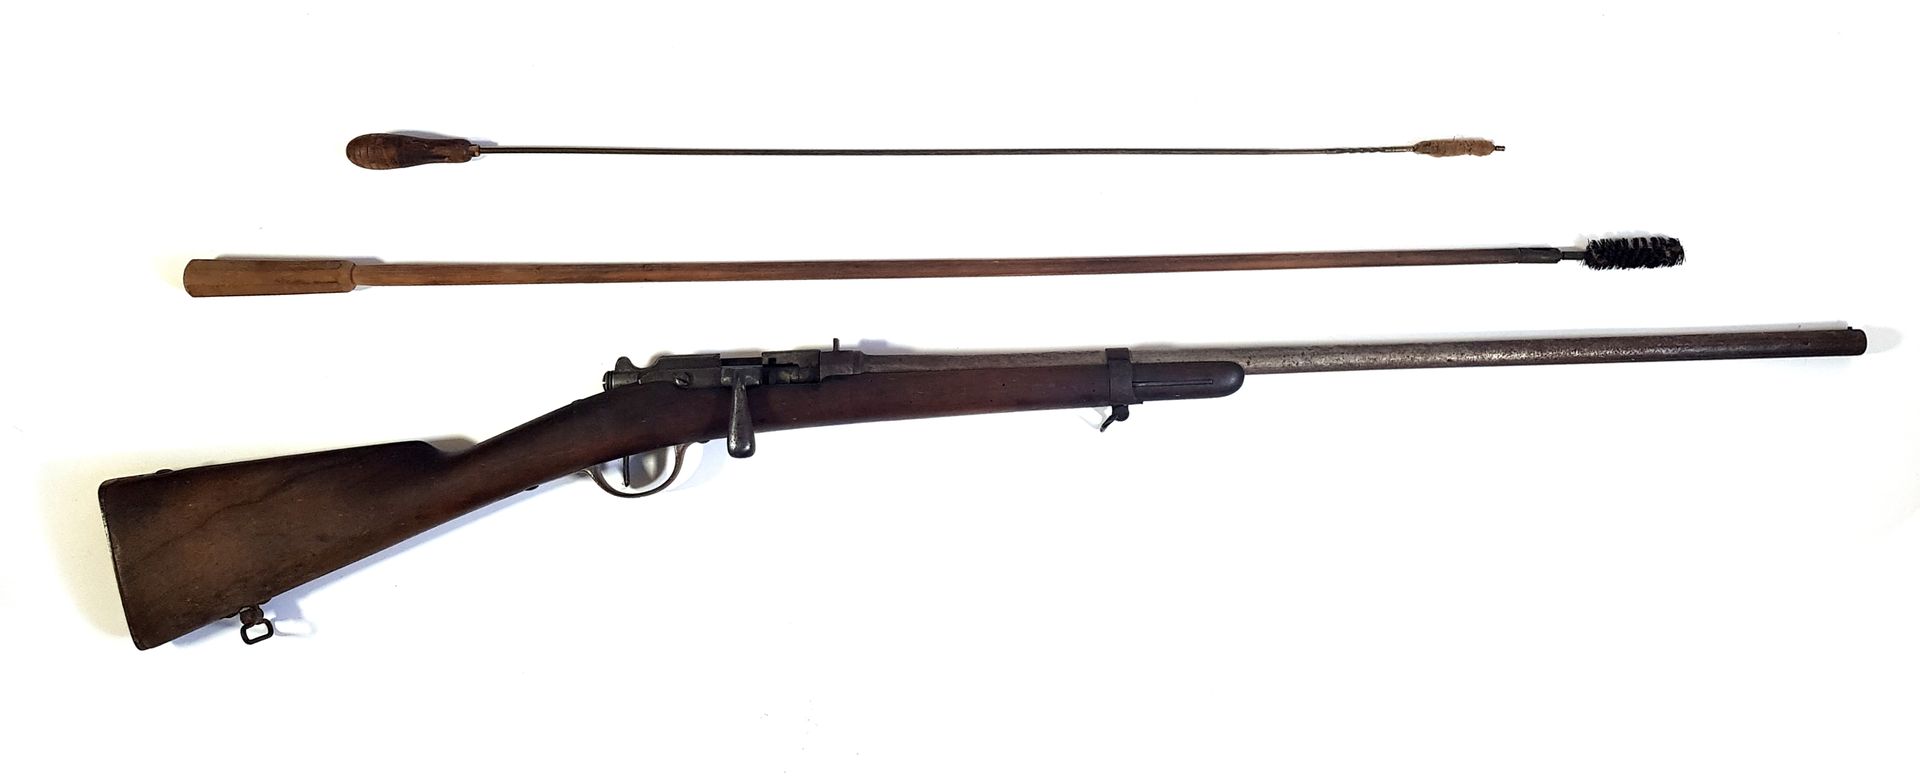 Null 改良型Chassepot步枪，1874型 圣艾蒂安制造（编号70703）。

L. 124 cm

有两个小齿轮相连

长：84和107厘米

磨损的&hellip;